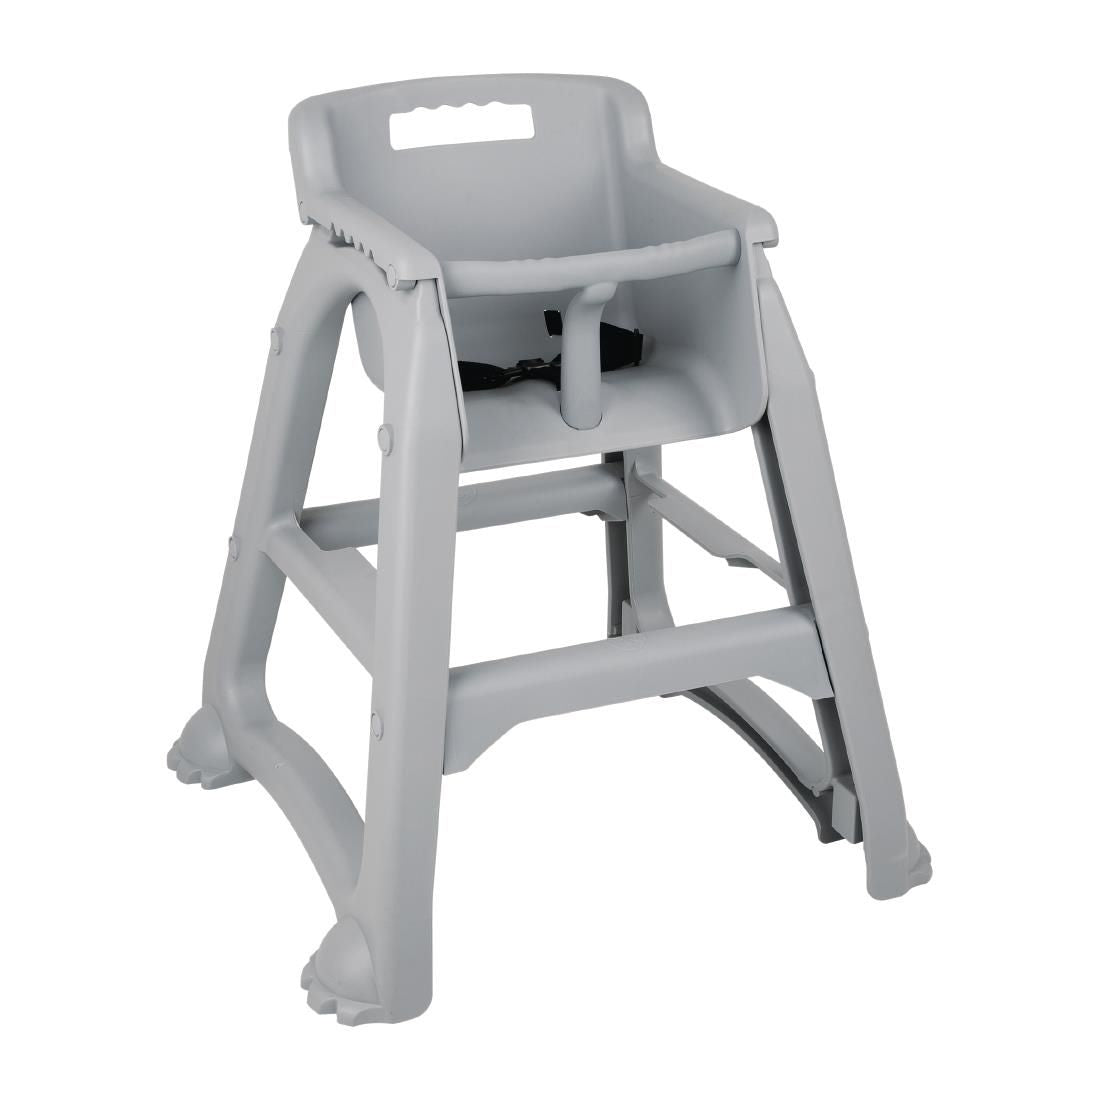 Bolero PP High Chair Grey JD Catering Equipment Solutions Ltd